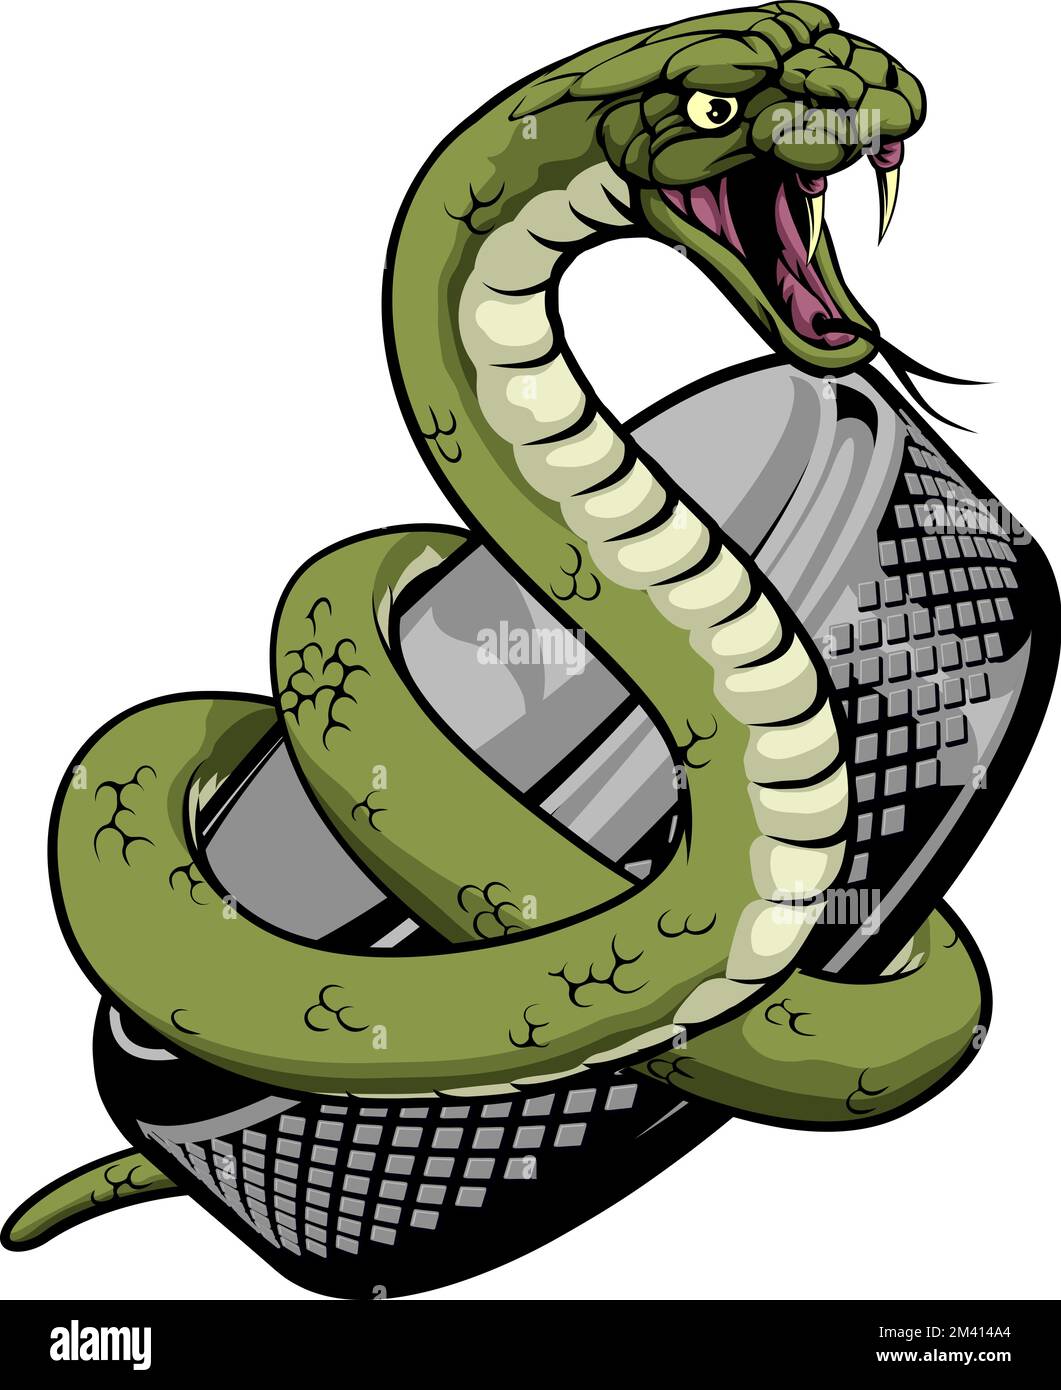 Snake Ice Hockey Team Sports Cartoon Mascot Illustrazione Vettoriale